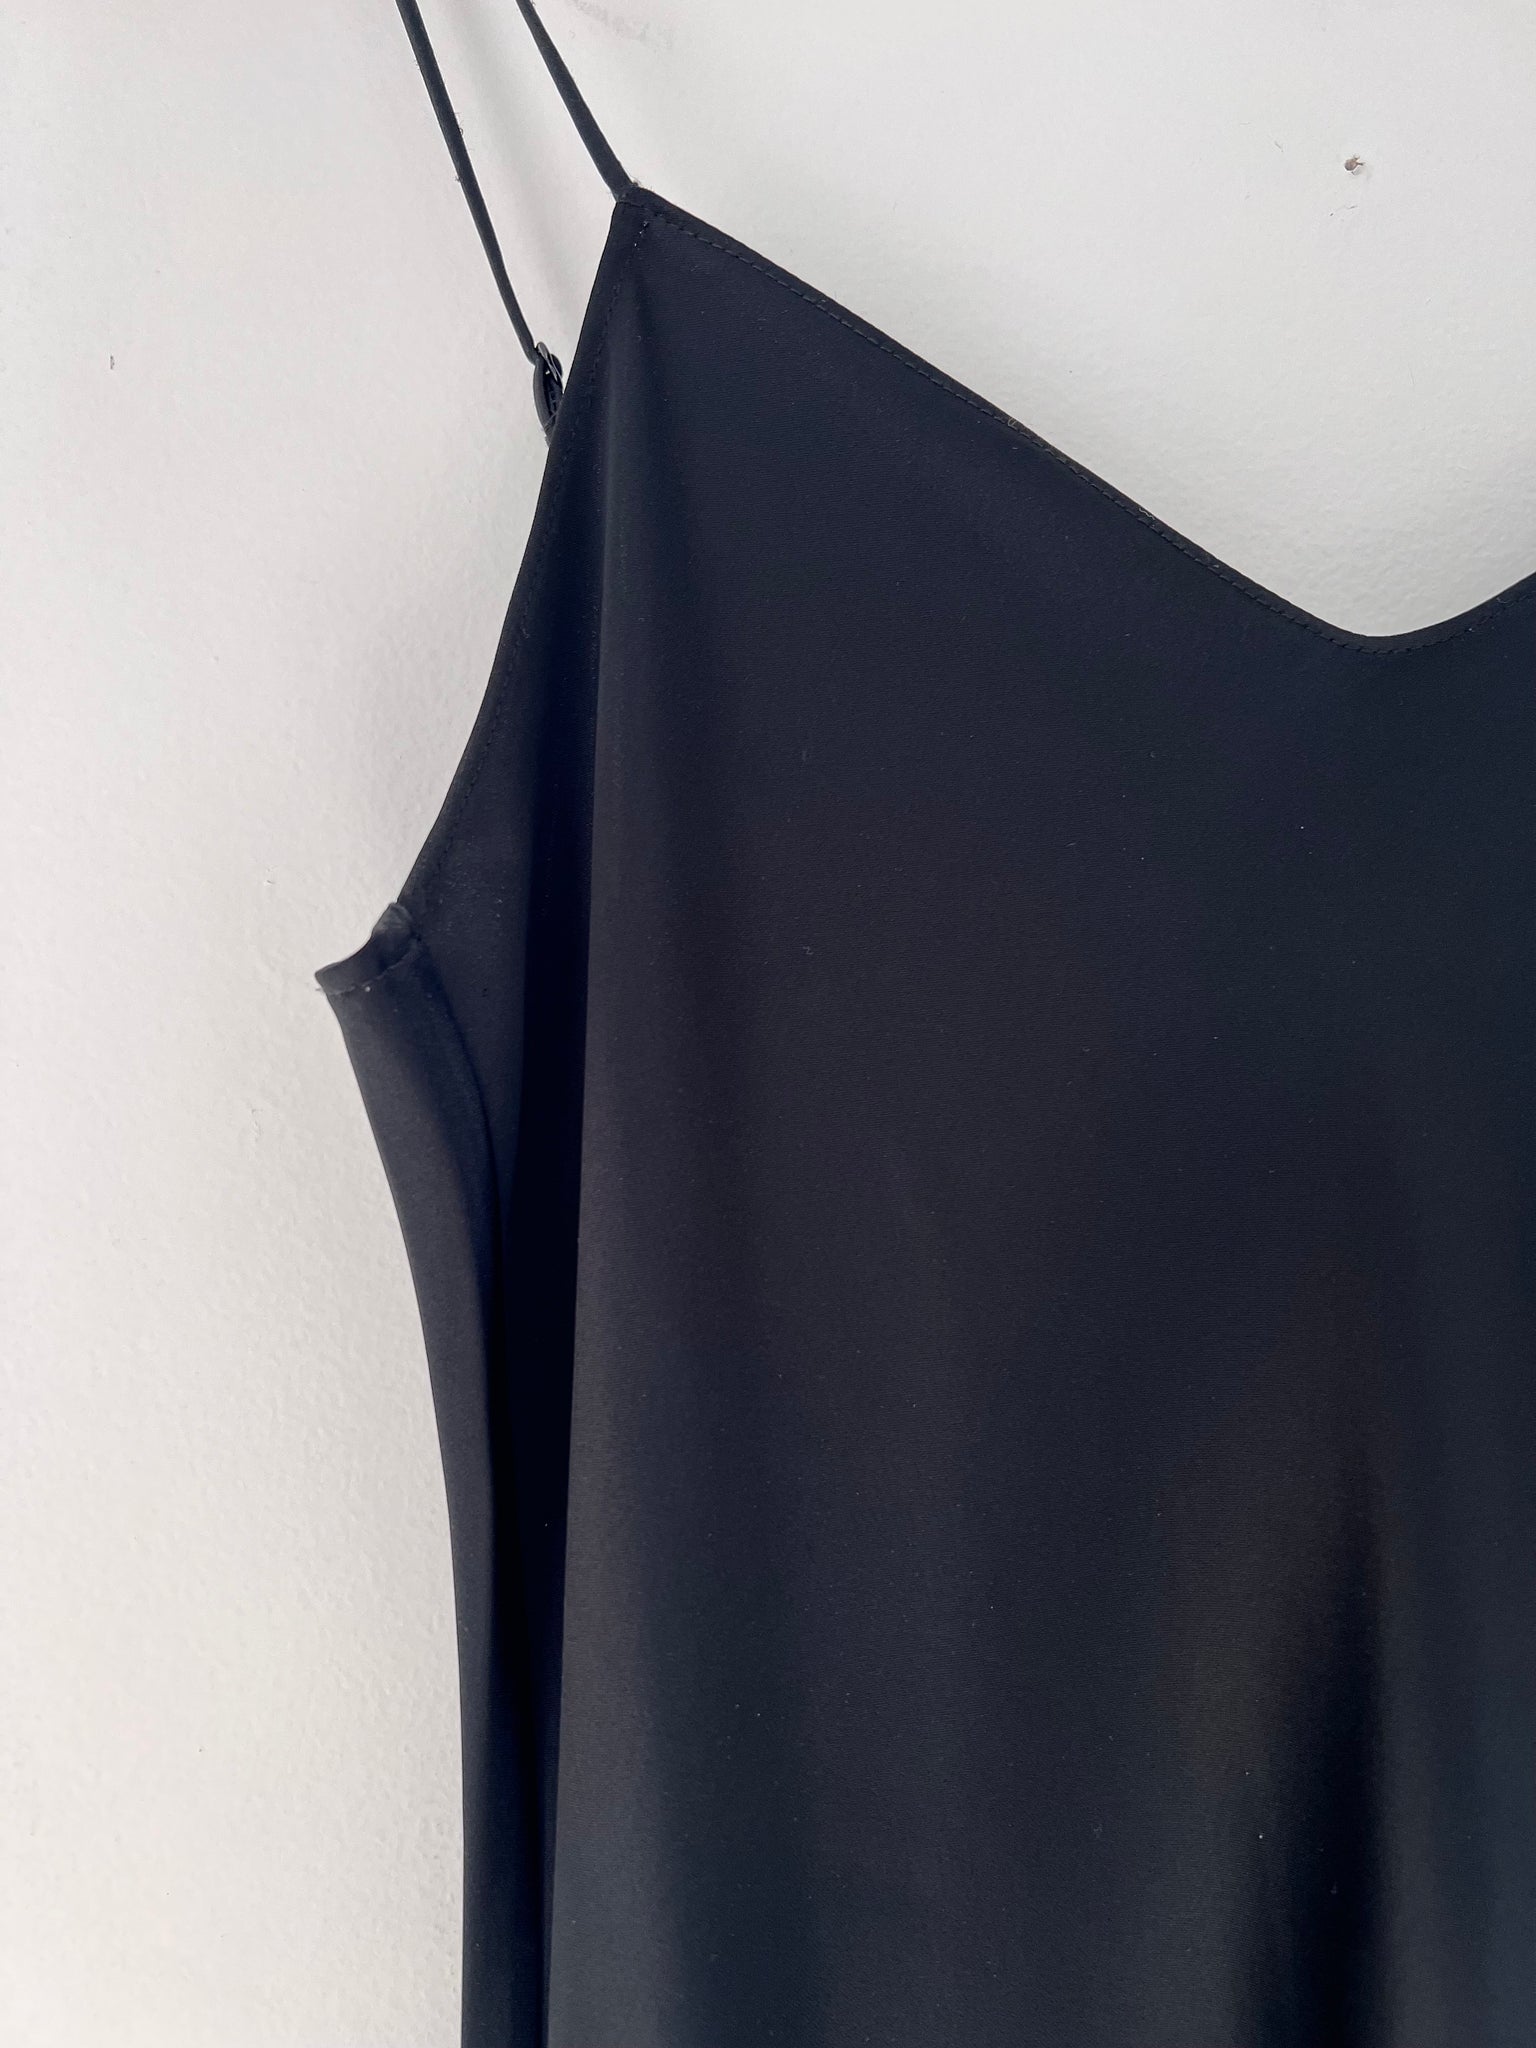 Bias-cut Black Satin Slip Dress by Ralph Lauren